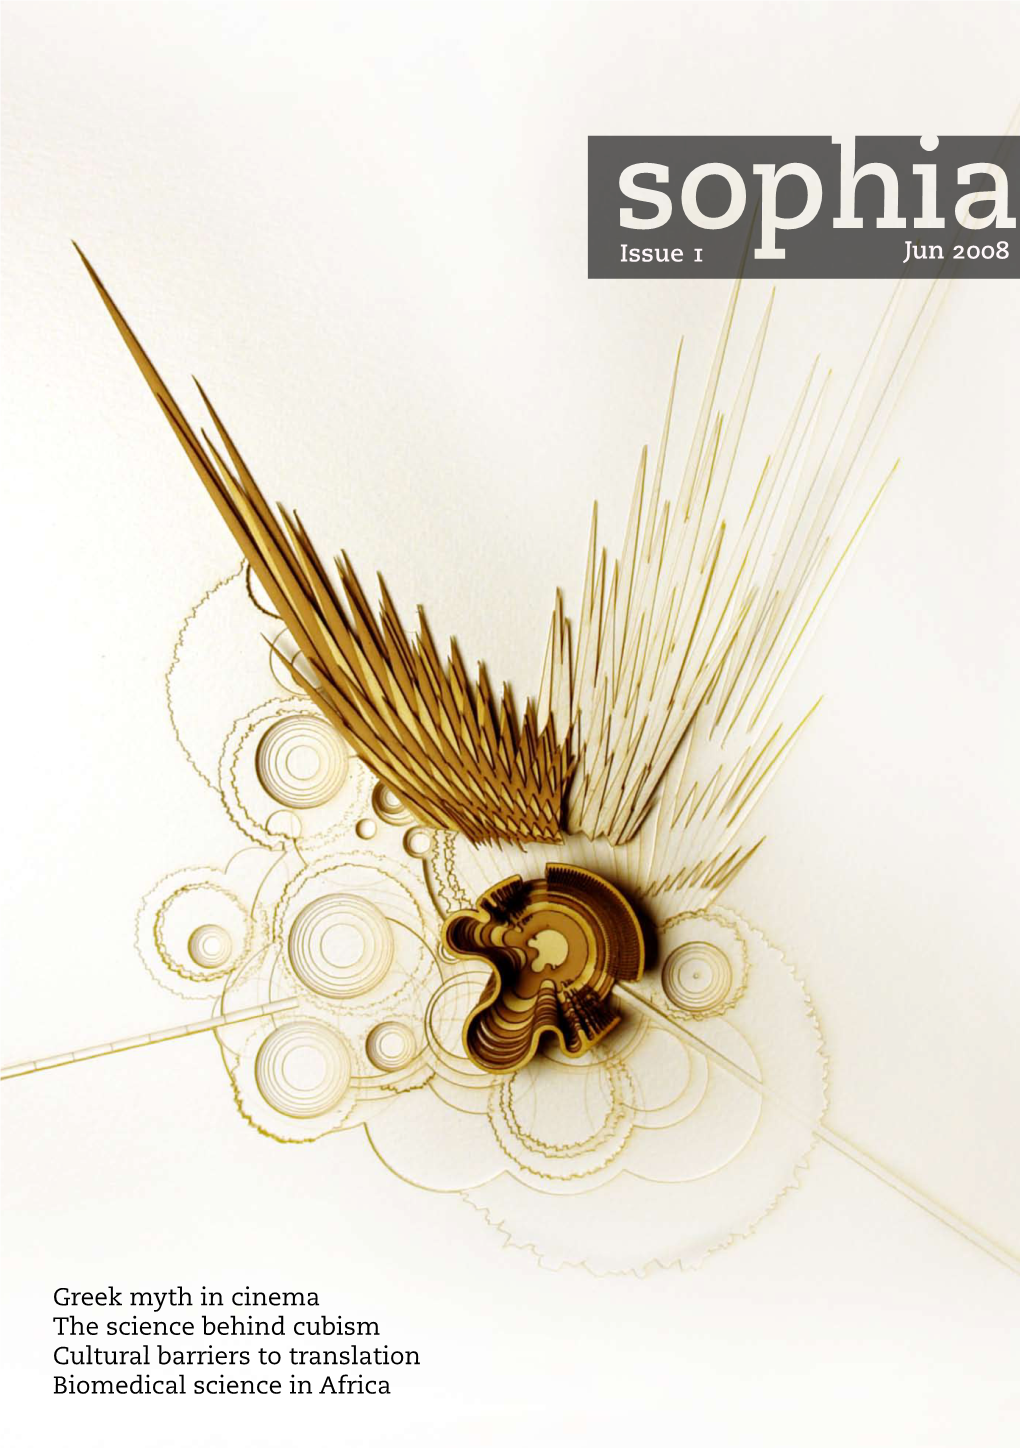 Sophia Issue 1 Jun 2008